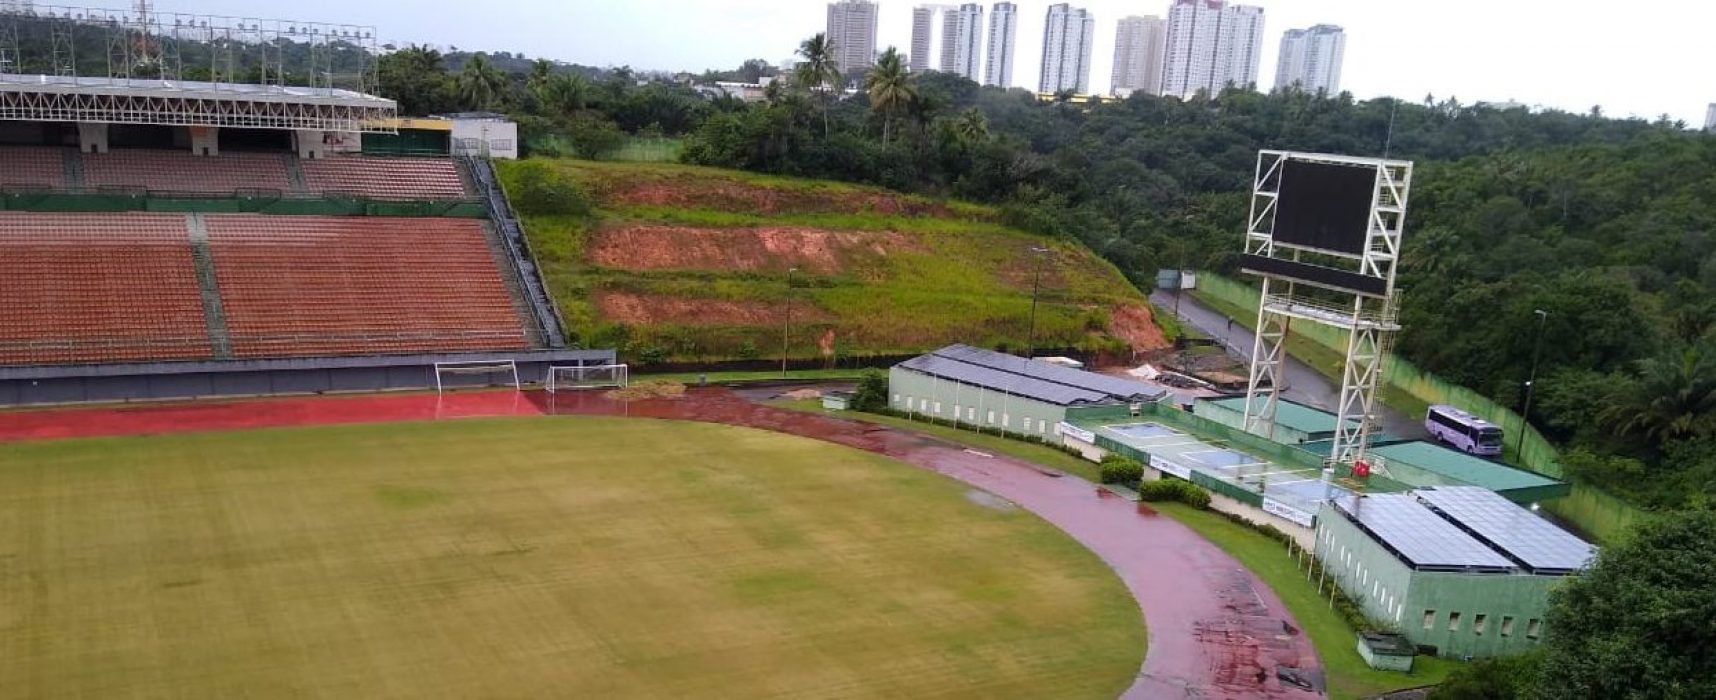 Estádio de Pituaçu está pronto para receber jogos da Copa do Nordeste e Campeonato Baiano